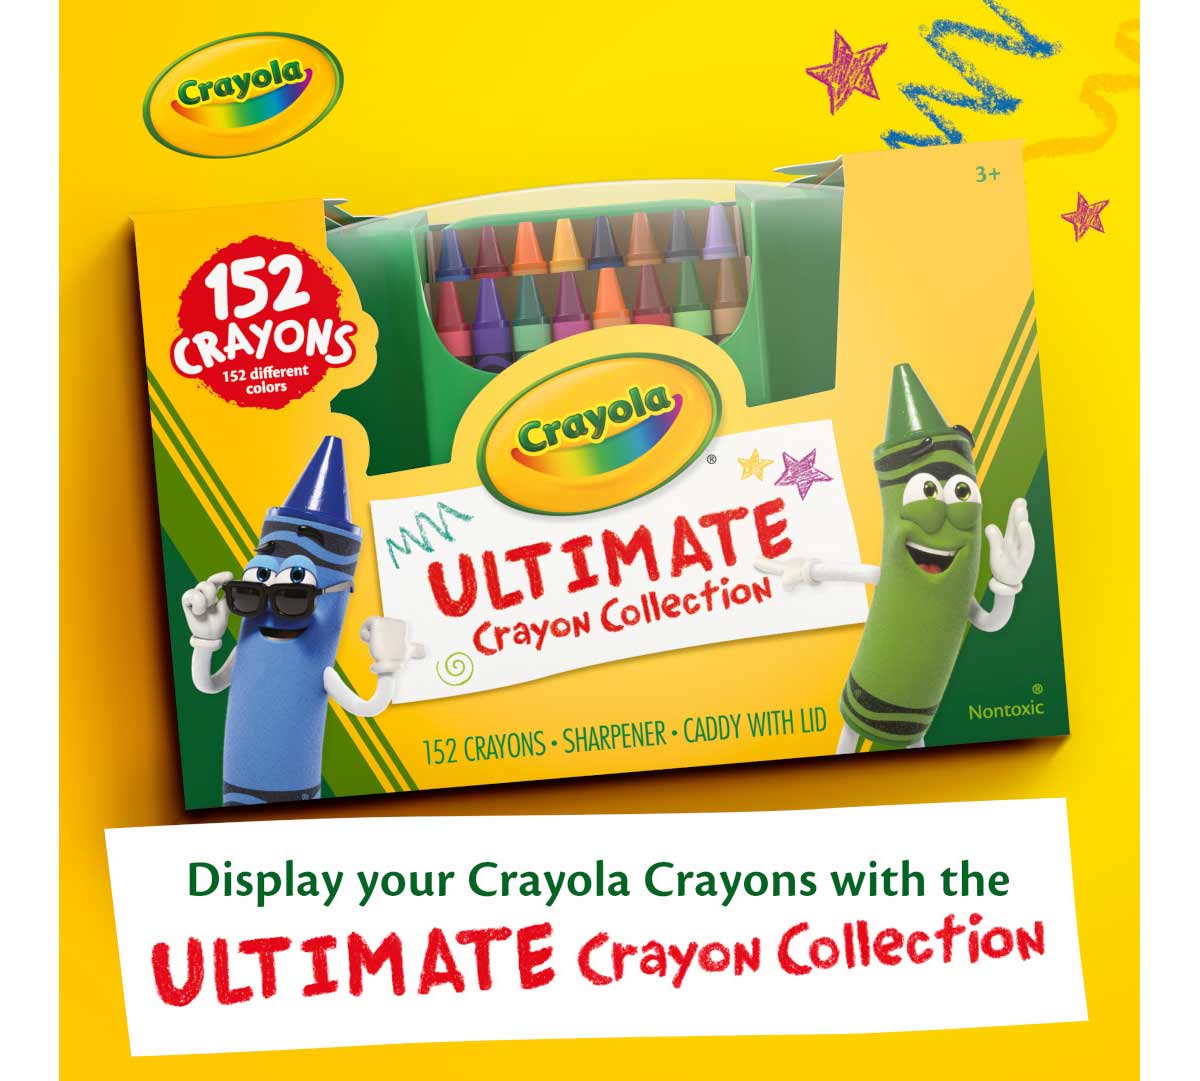 https://shop.crayola.com/on/demandware.static/-/Sites-crayola-storefront/default/dw30ac53b5/images/52-0030-Ultimate-Crayon-Collection_152ct_06.jpg